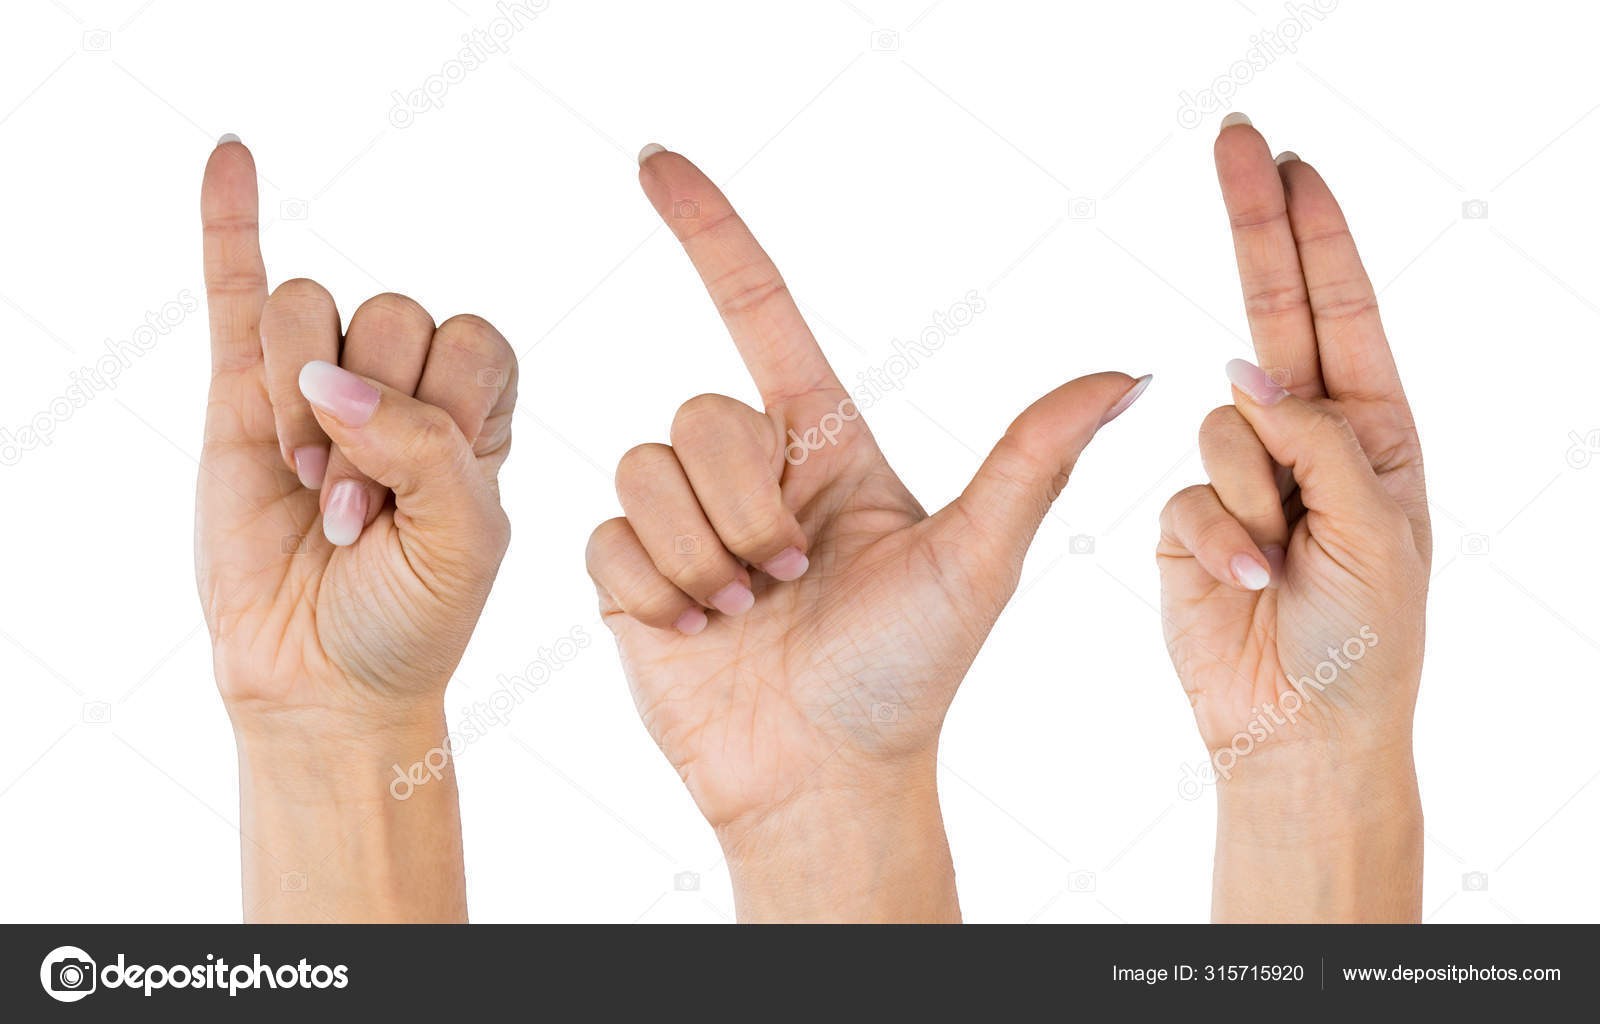 102 285 Sign Language Pictures Sign Language Stock Photos Images Depositphotos